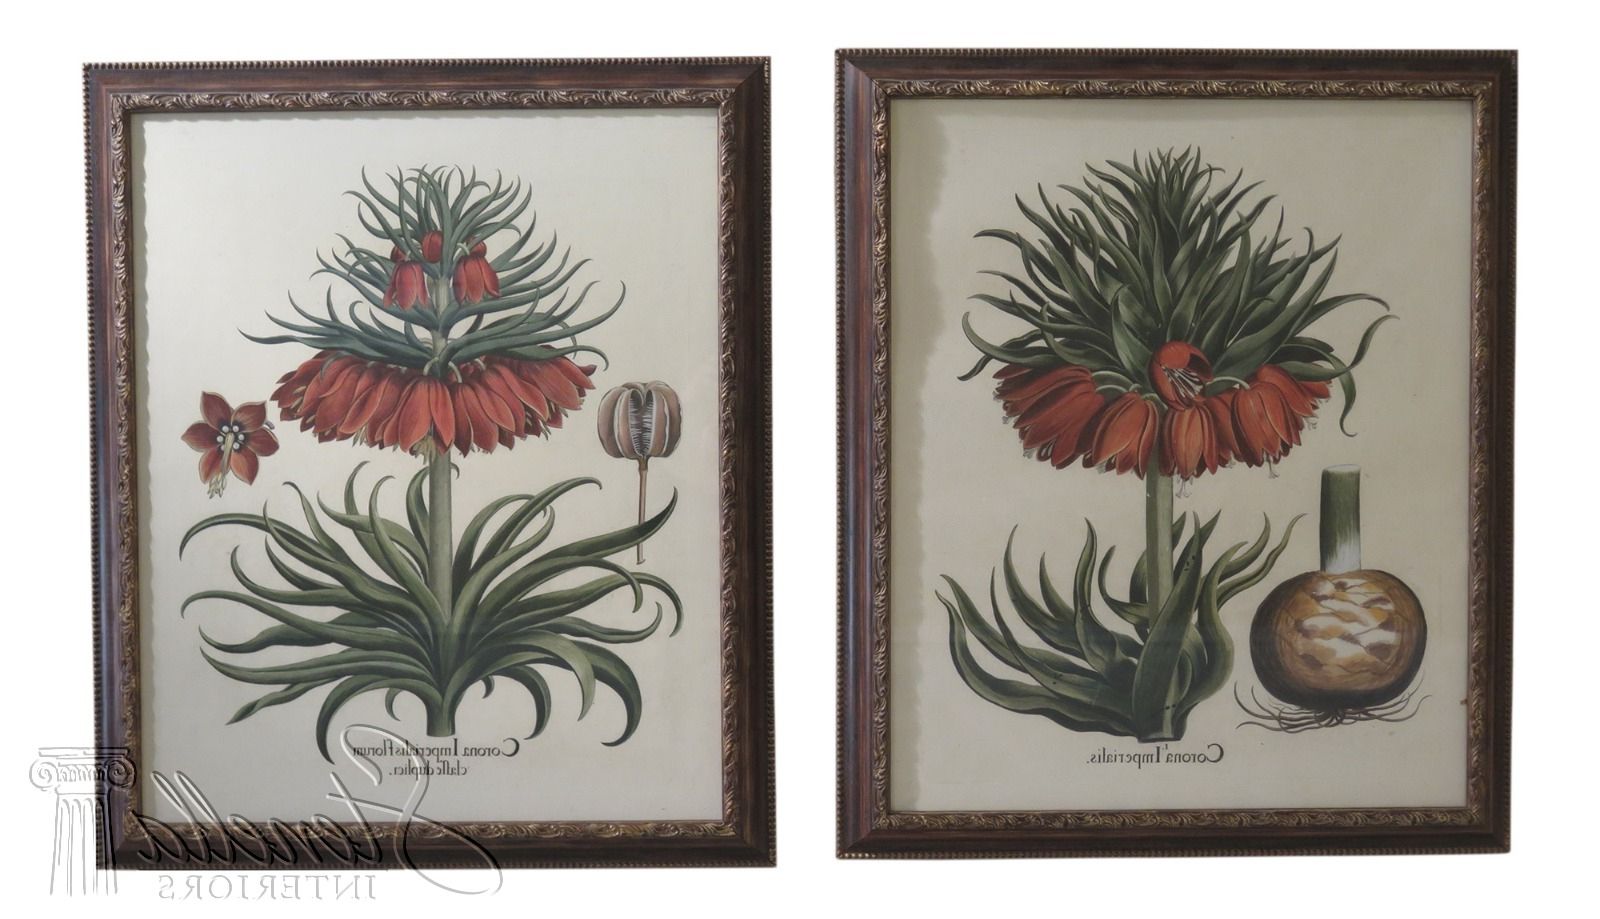 Lf31570ec: Pair Large Framed Botanical Decorative Art Regarding Most Recently Released Colorful Framed Art Prints (View 2 of 20)